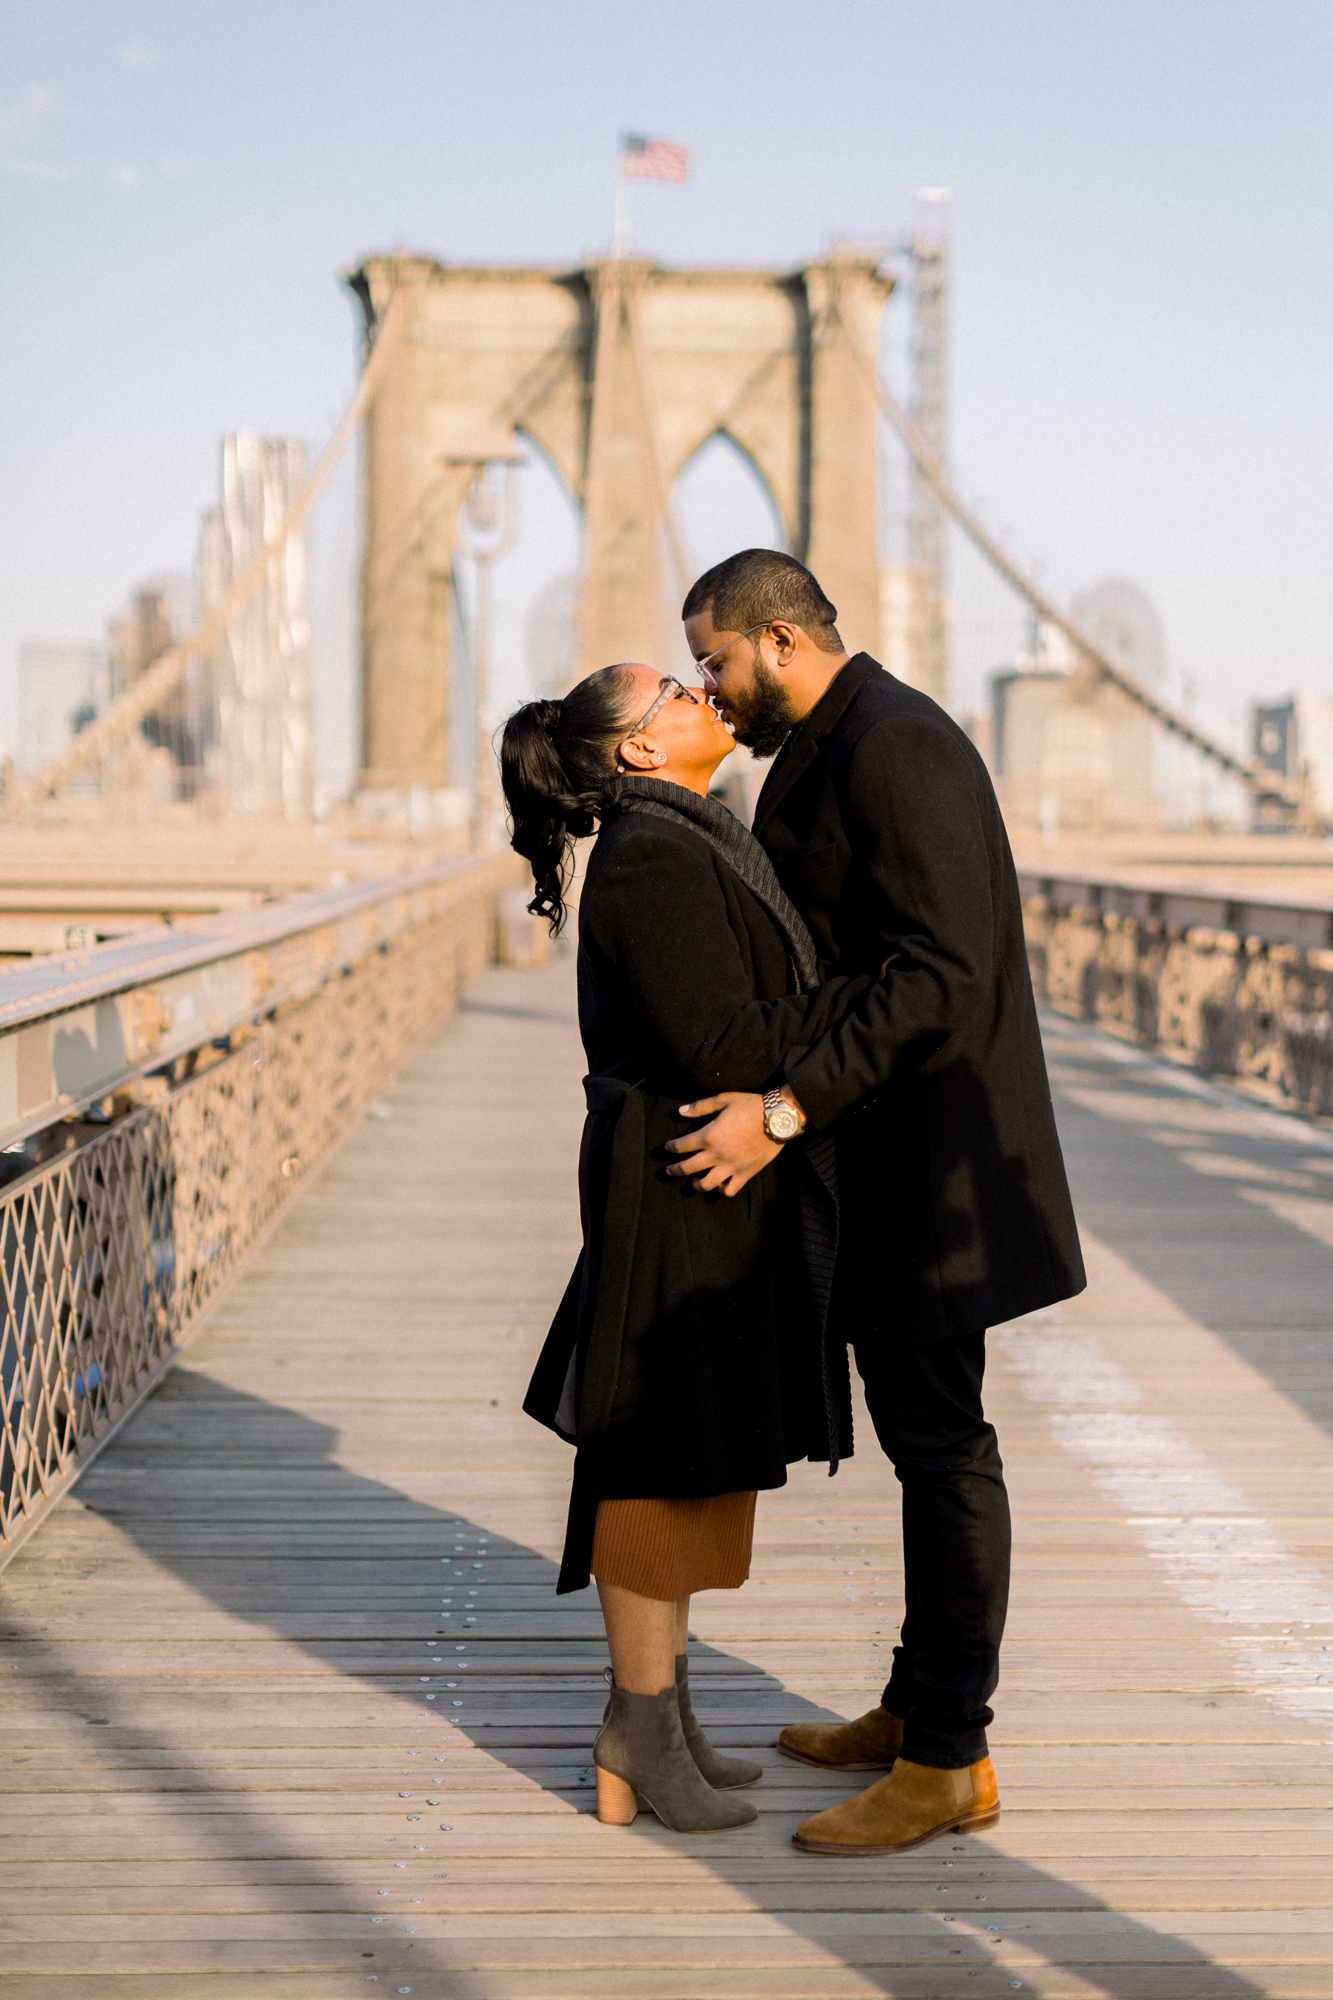 Radiant Autumn DUMBO Engagement Photography at the Brooklyn Bridge